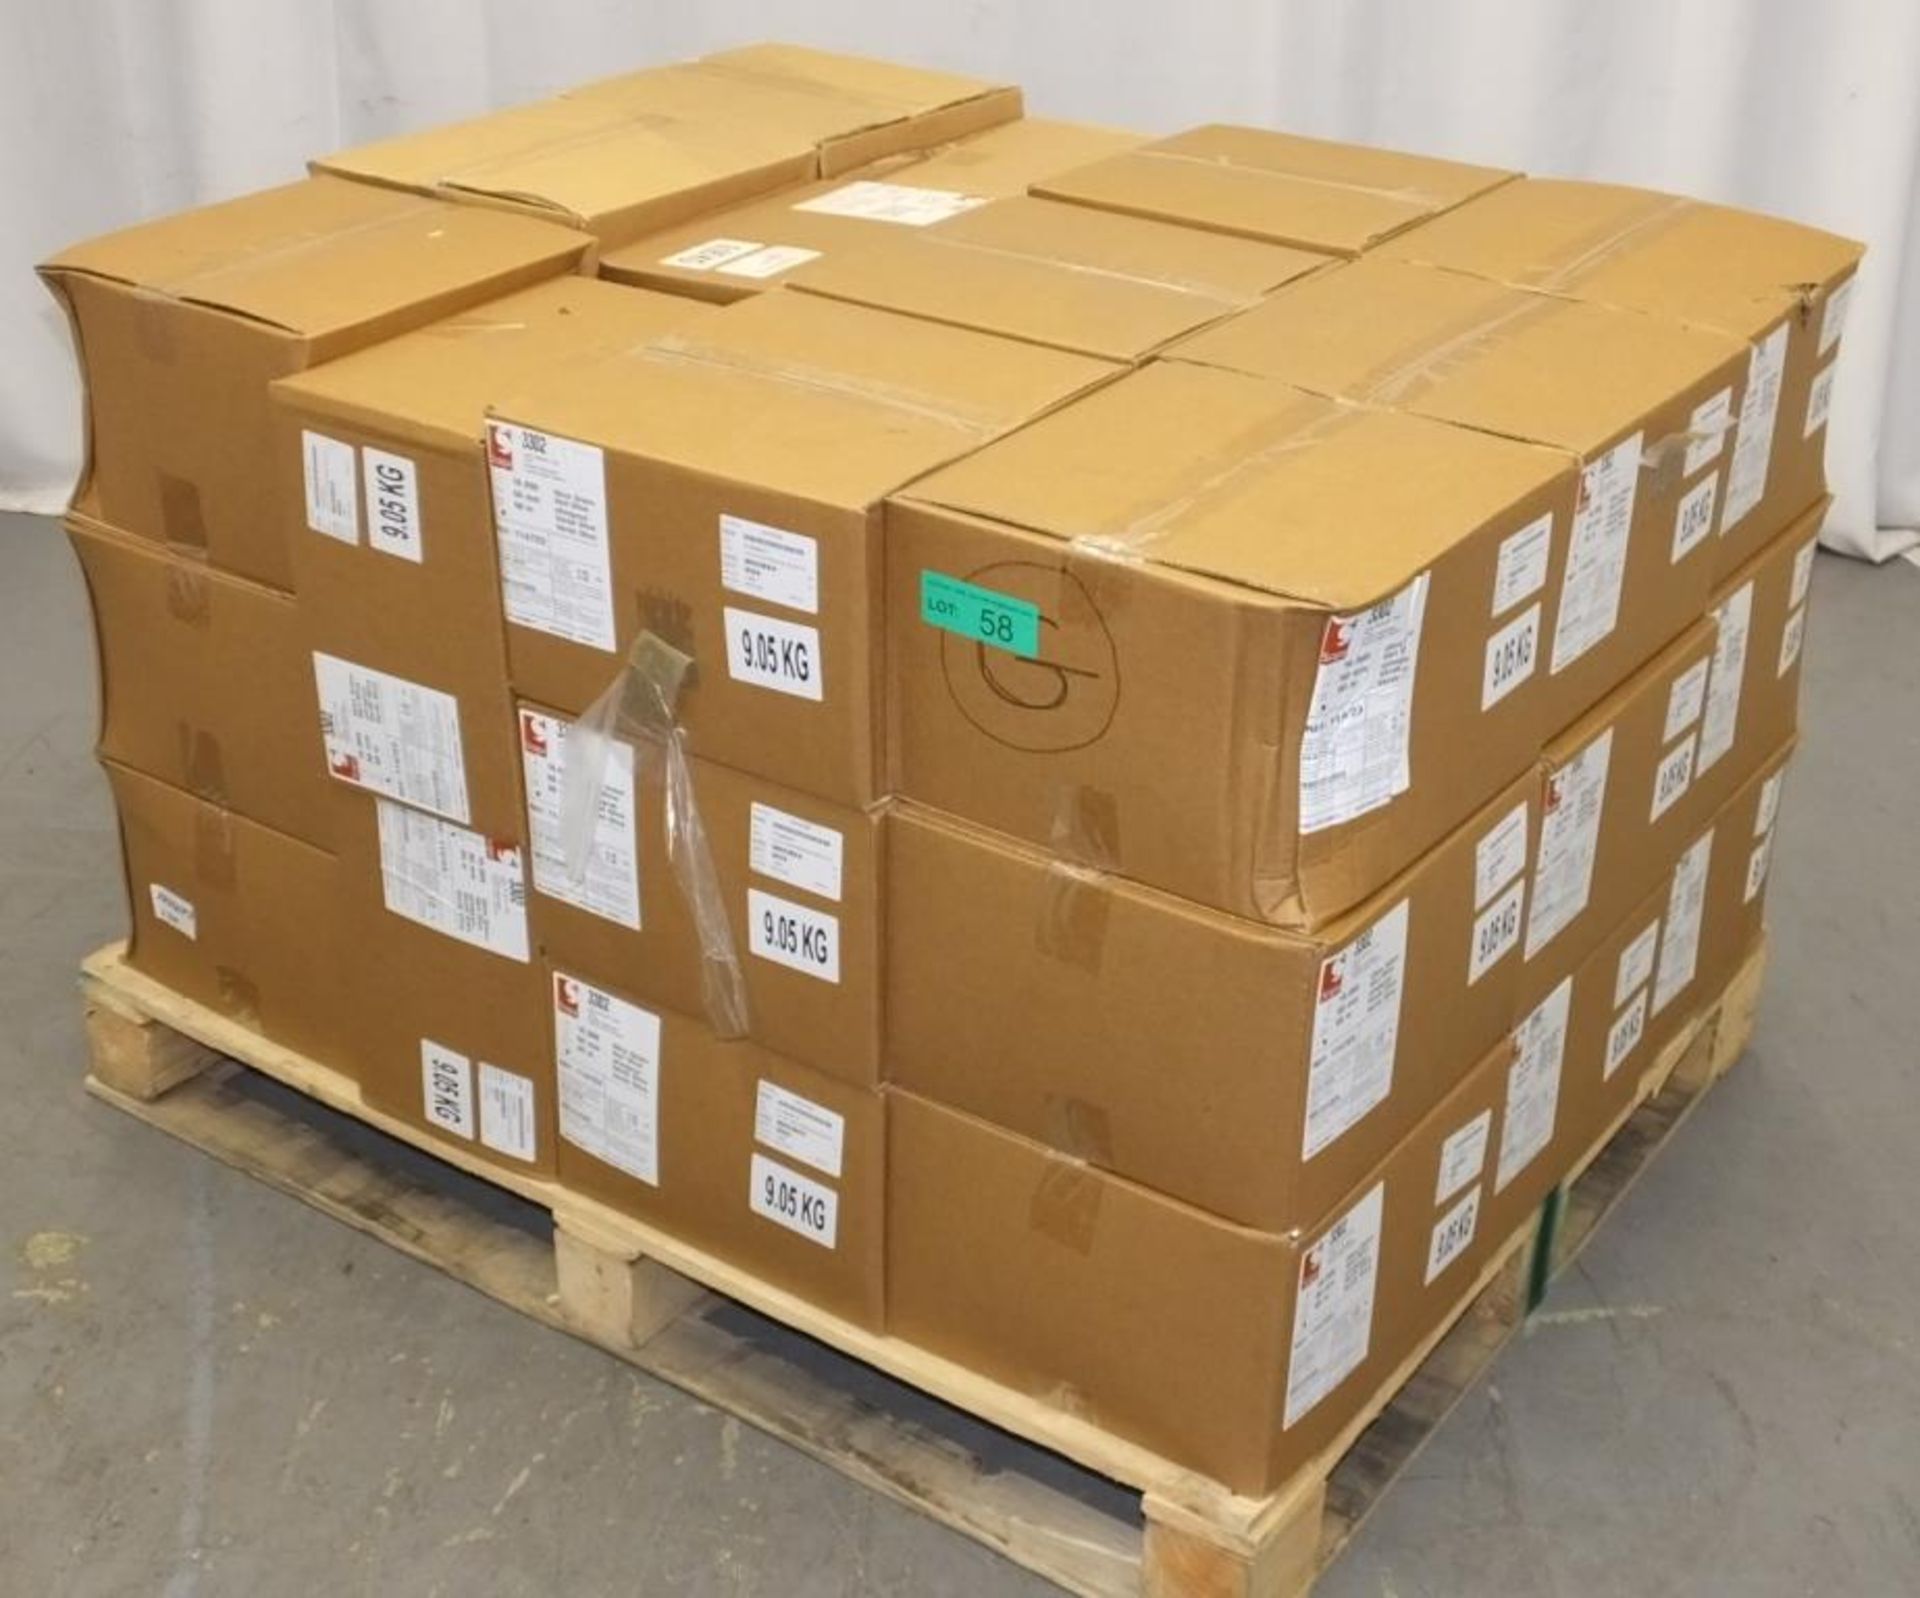 Scapa 3302 Tape - Olive Green - 50mm x 50M rolls - 16 rolls per box - 33 boxes